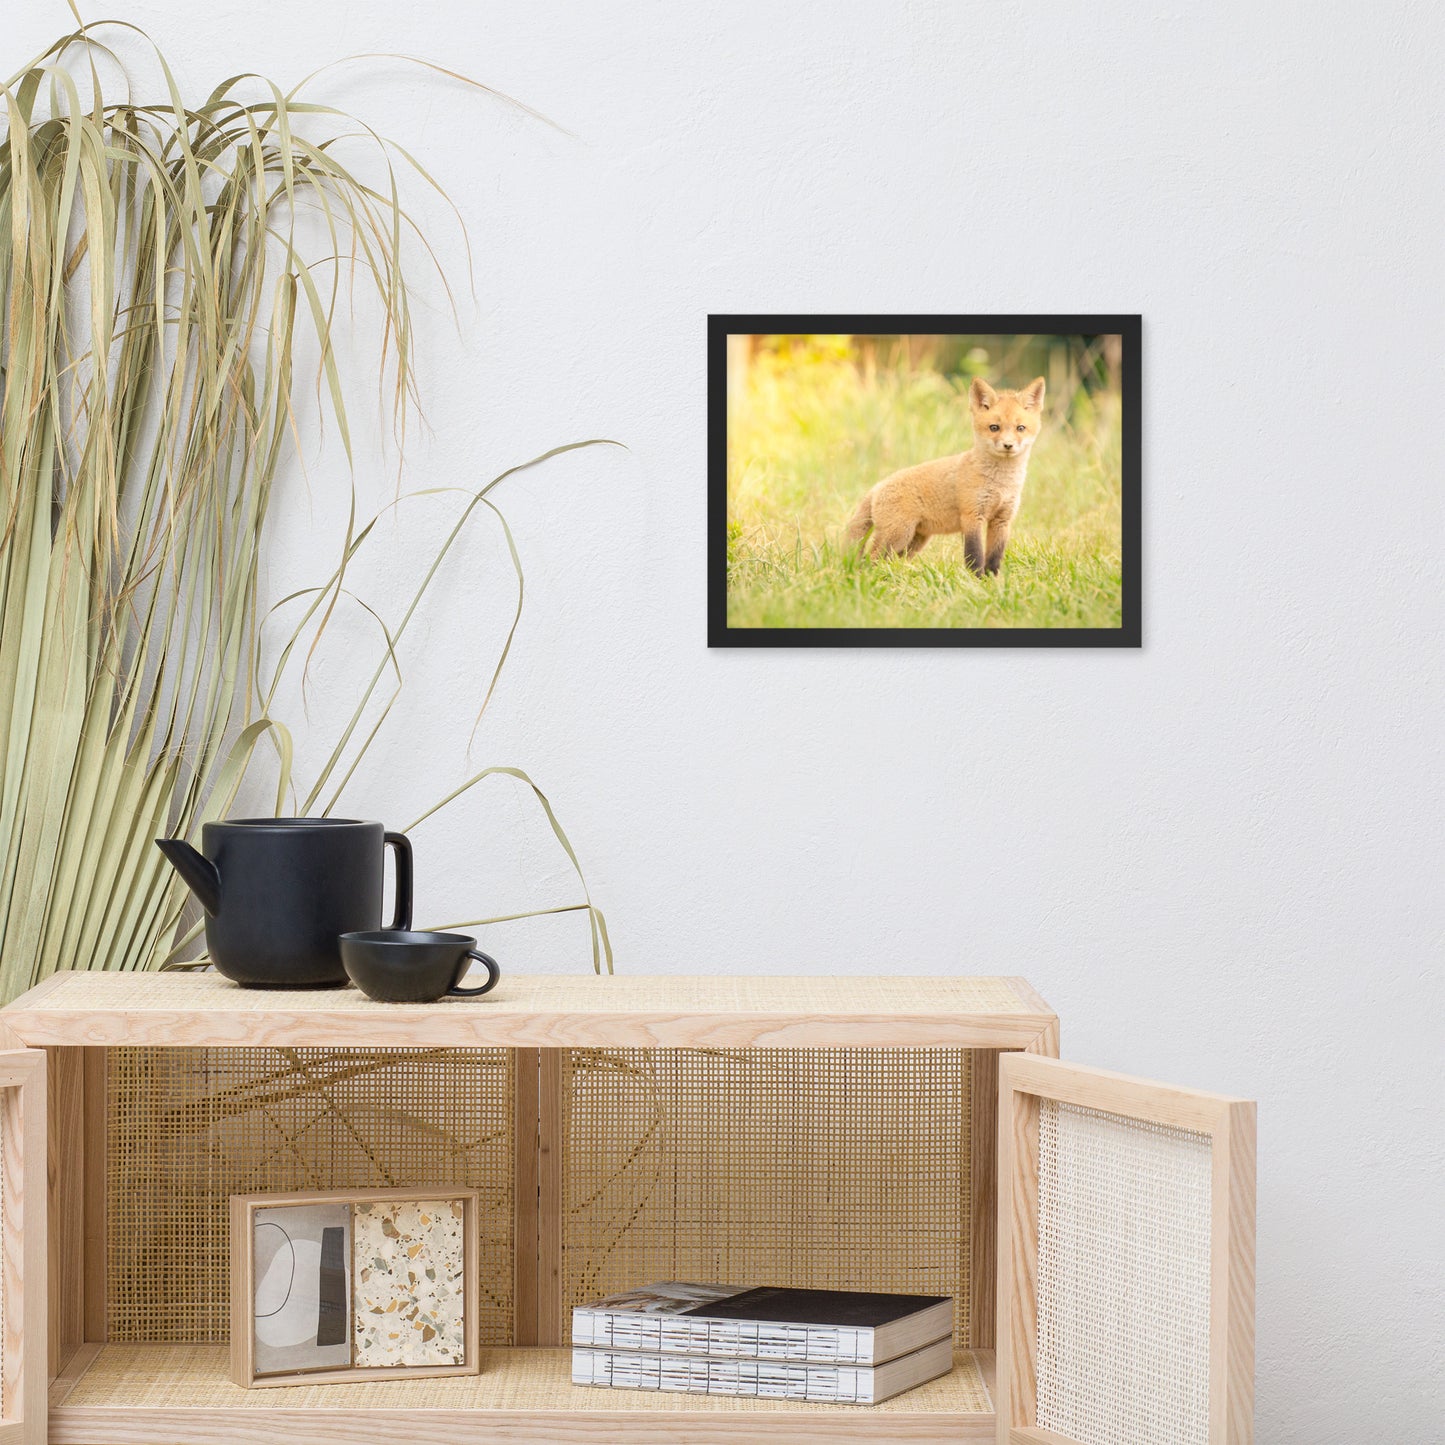 Framed Nursery Art: Baby Red Fox in the Sun - Animal / Wildlife / Nature Artwork - Wall Decor - Framed Wall Art Print